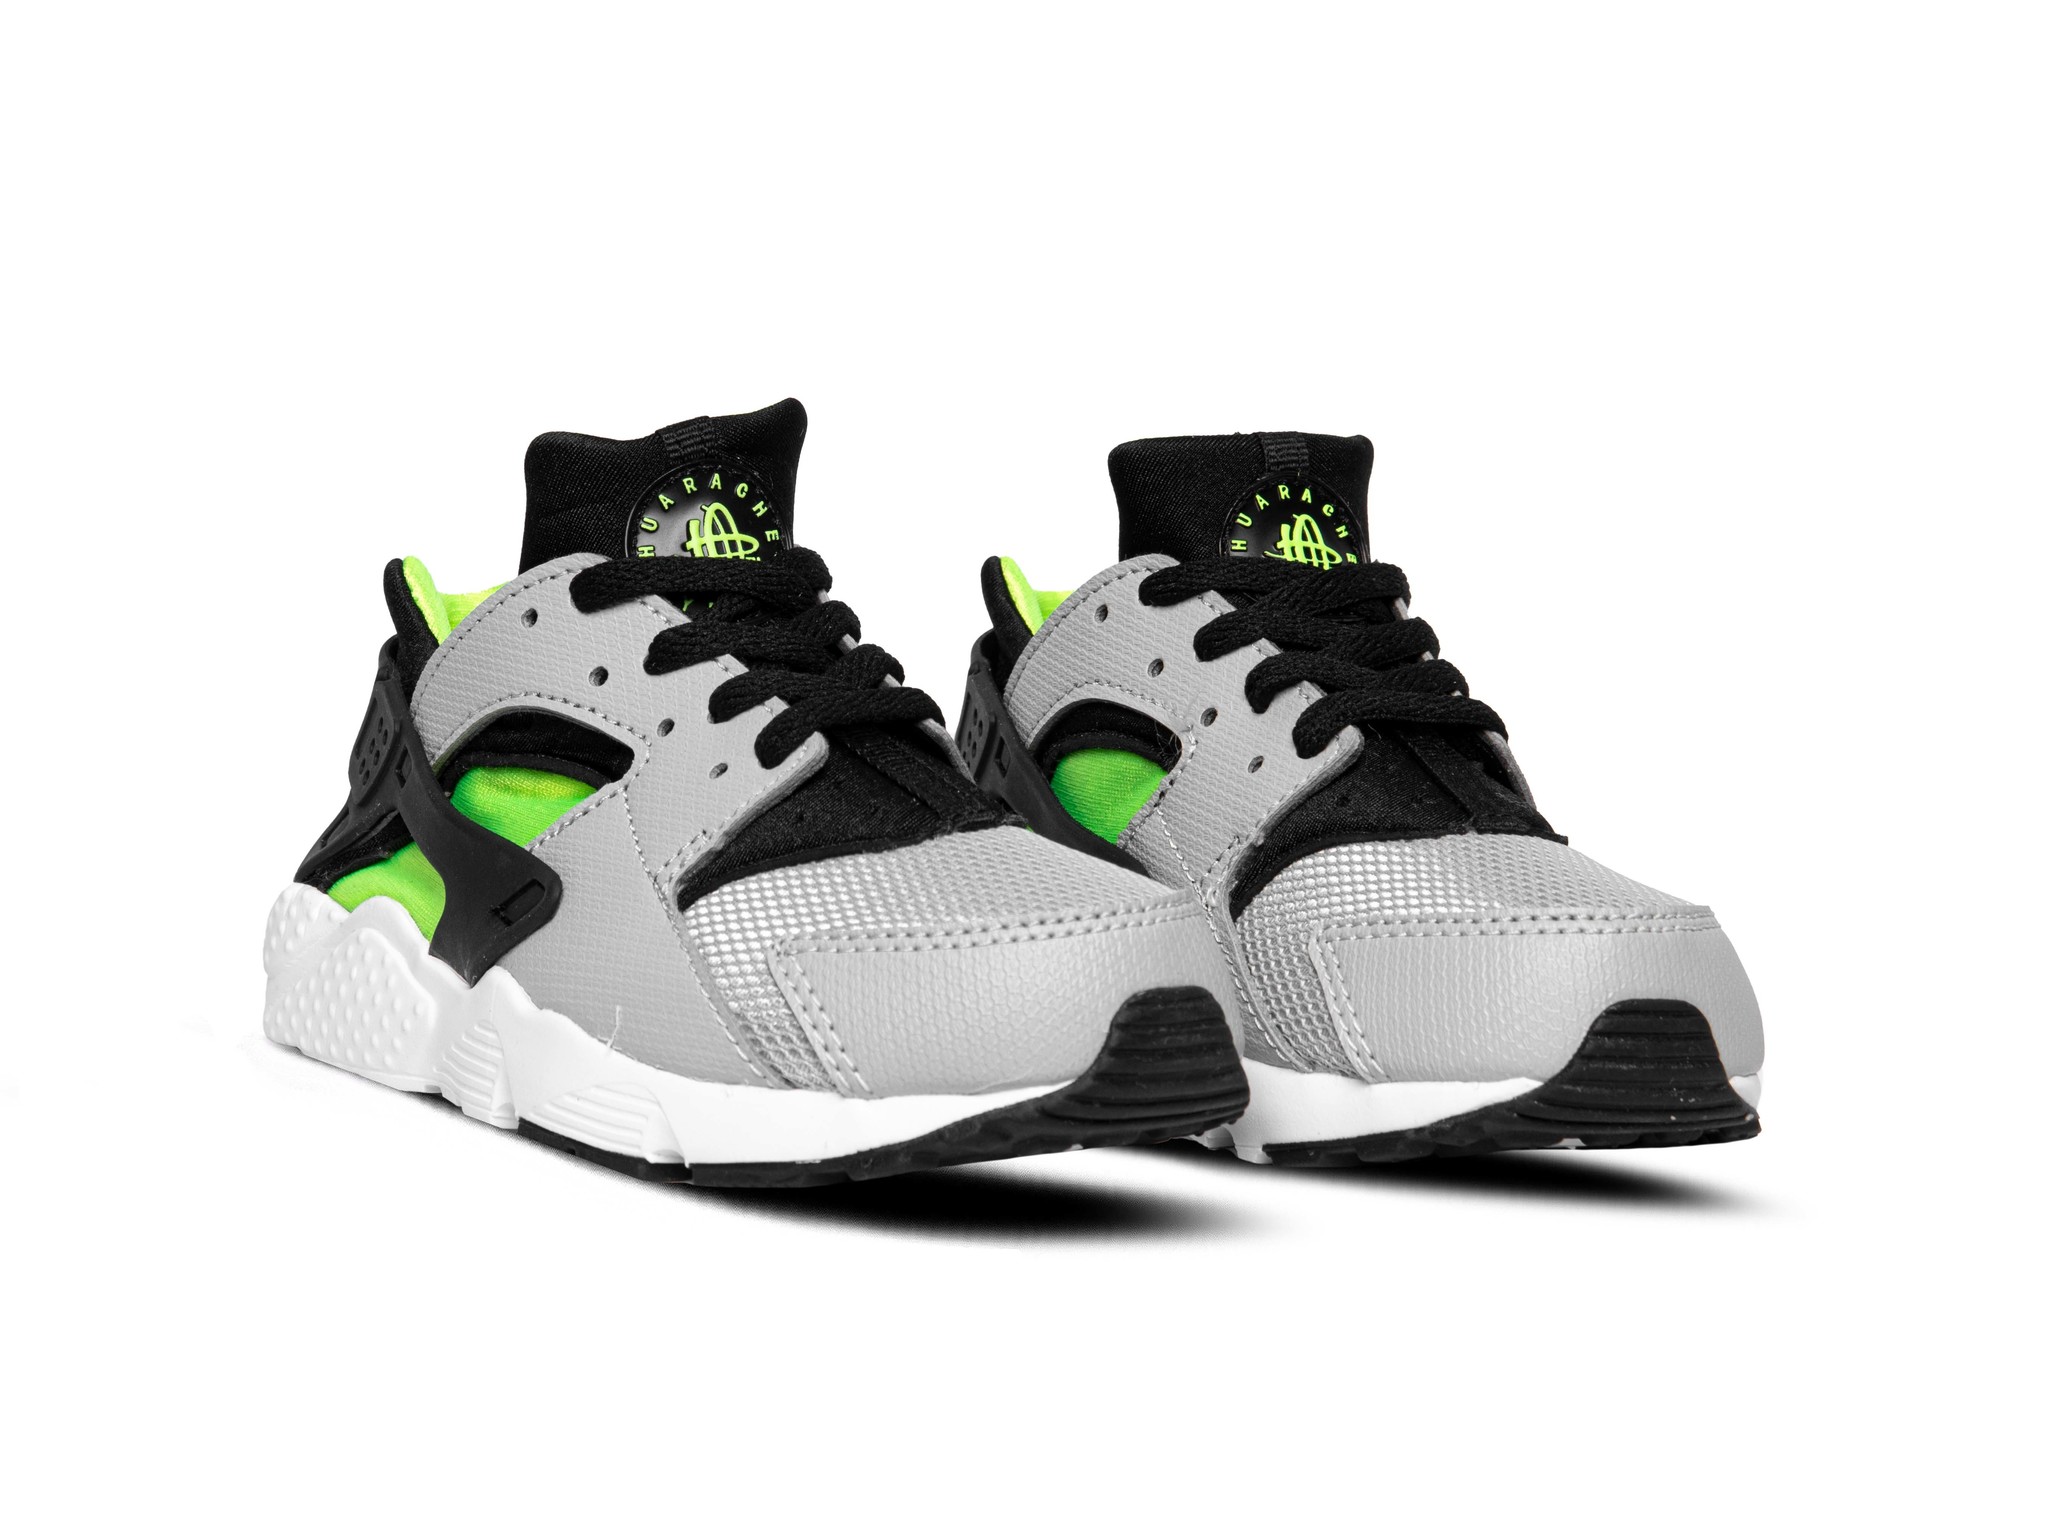 Pef Línea de visión Cariñoso Nike Huarache Run PS Wolf Grey Black Electric Green 704949 015 | Bruut -  Bruut Sneakers & Clothing Store